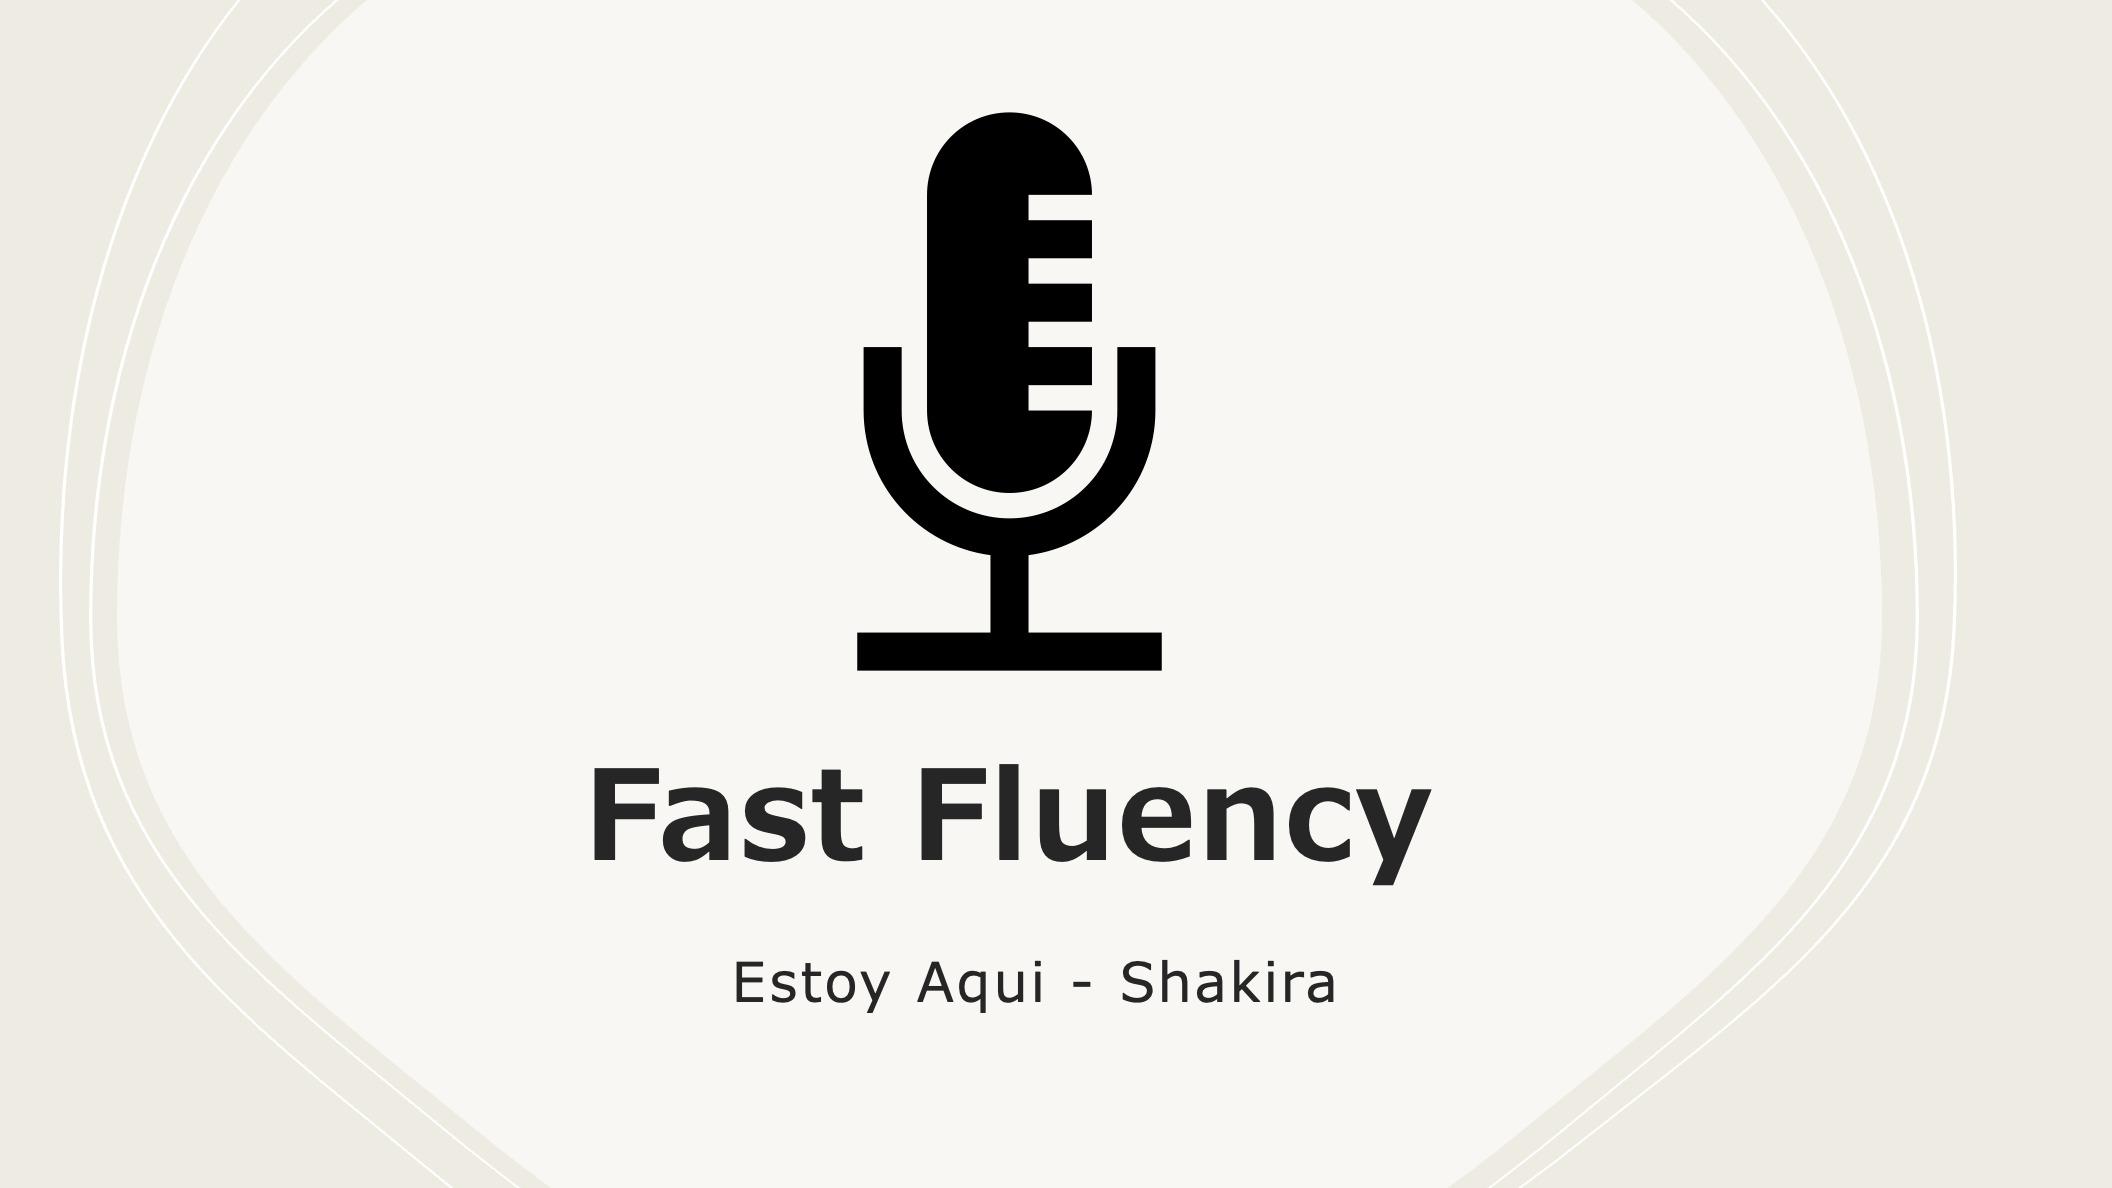 Fast Fluency: Estoy Aqui